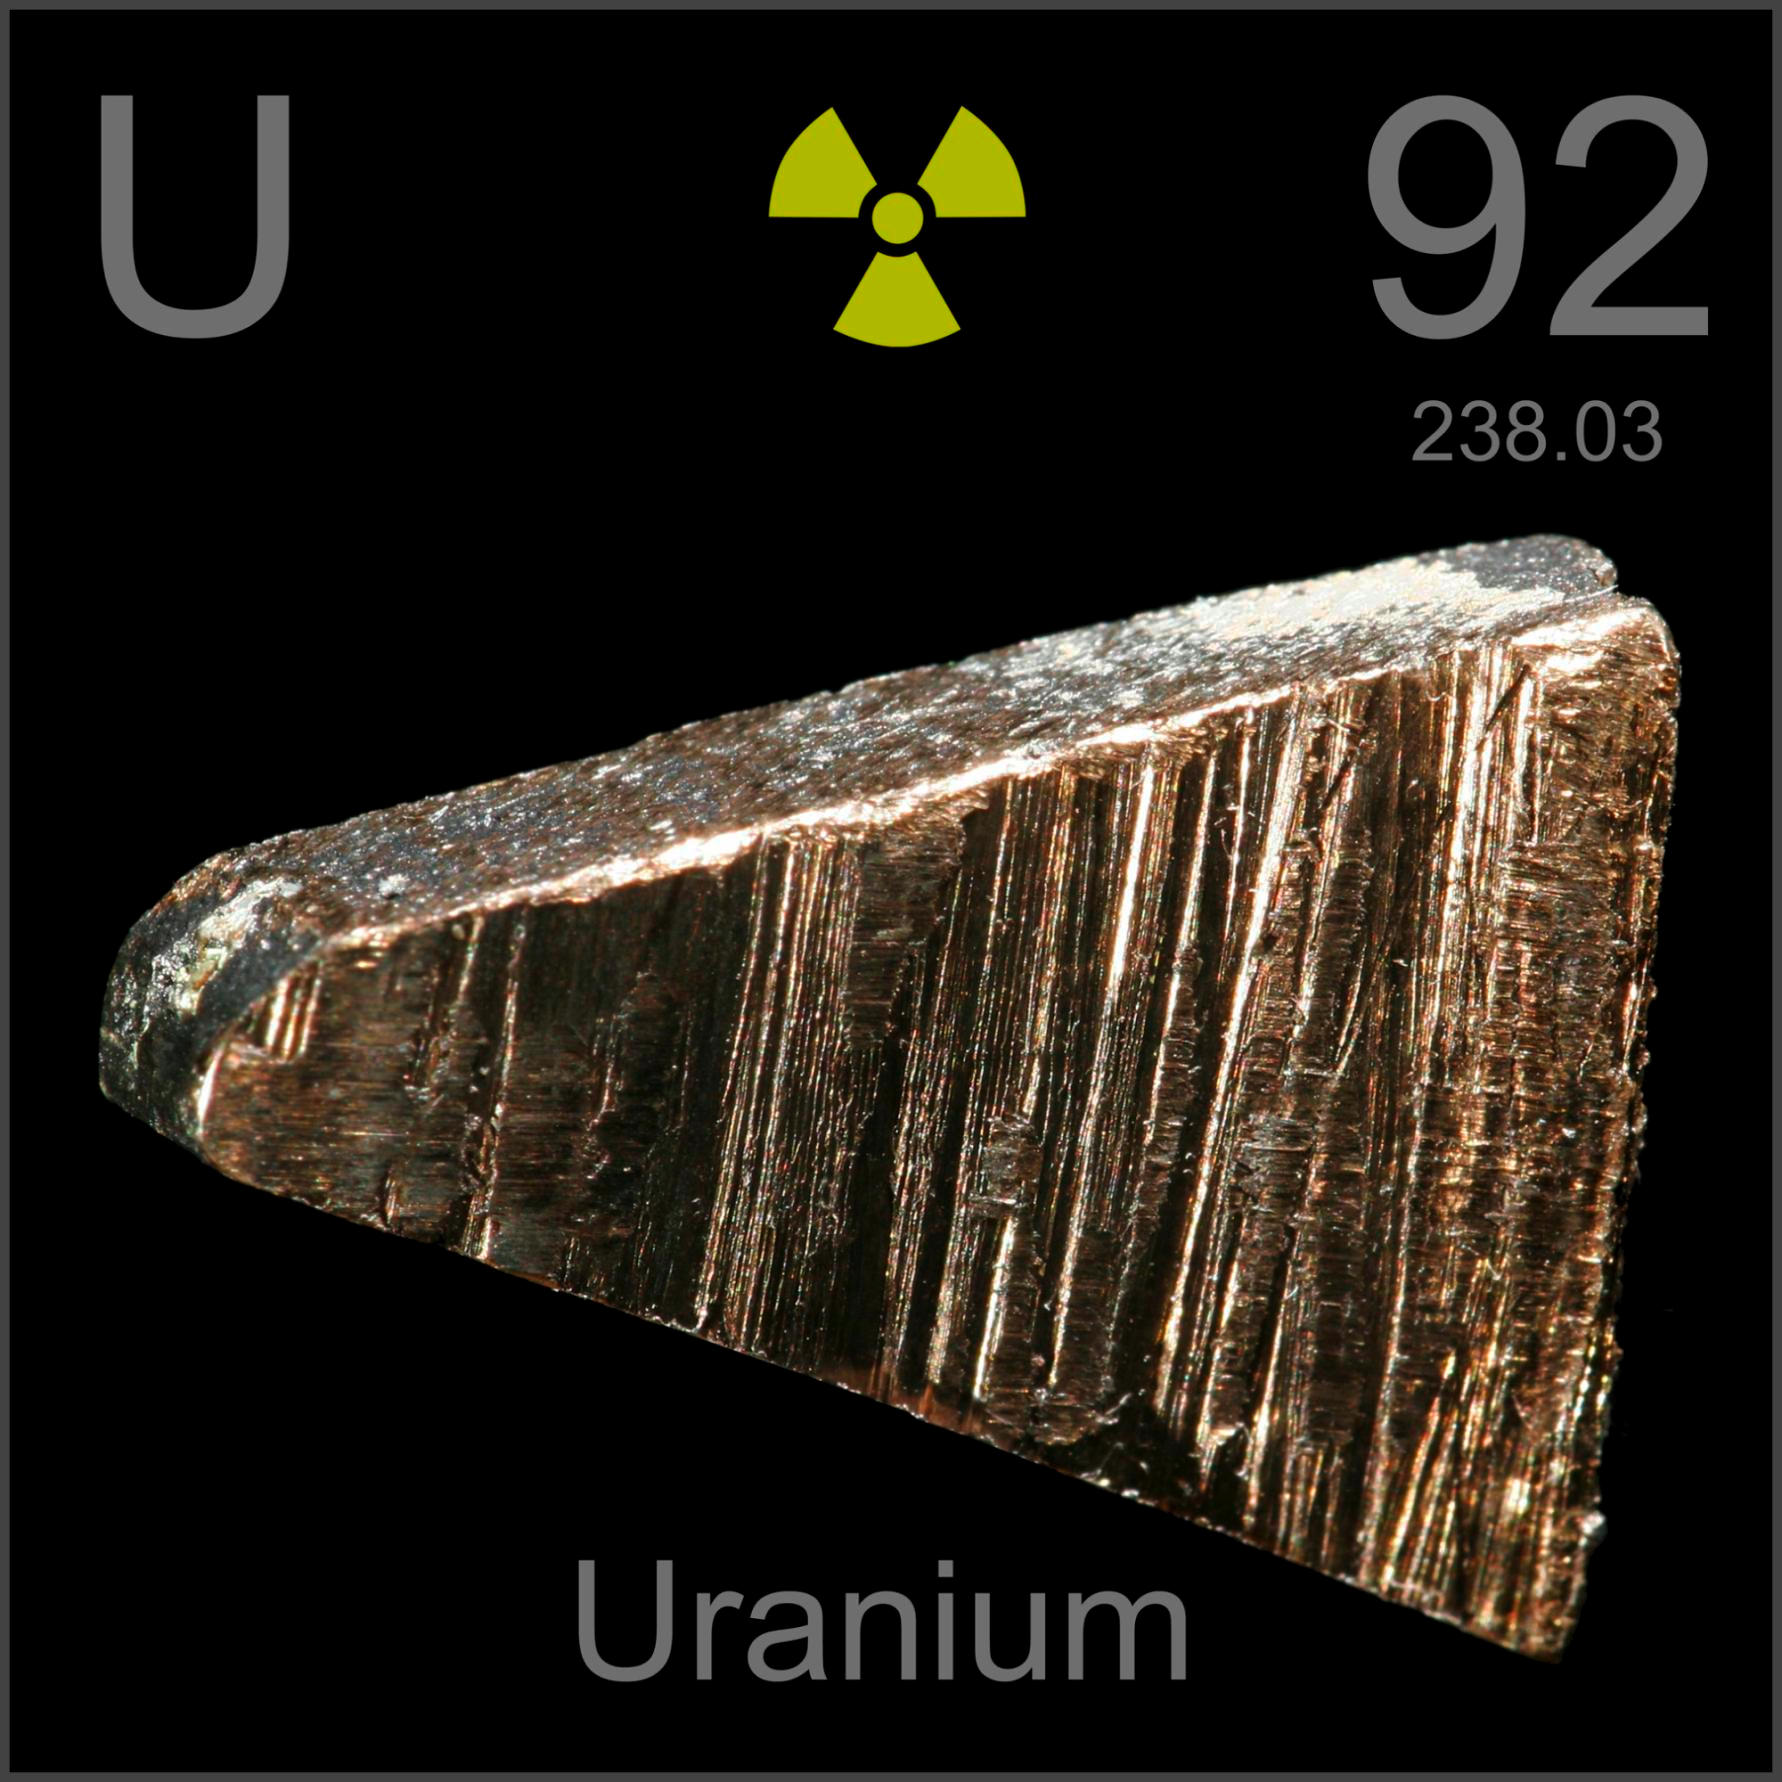 Sample of the element Uranium in the Periodic Table